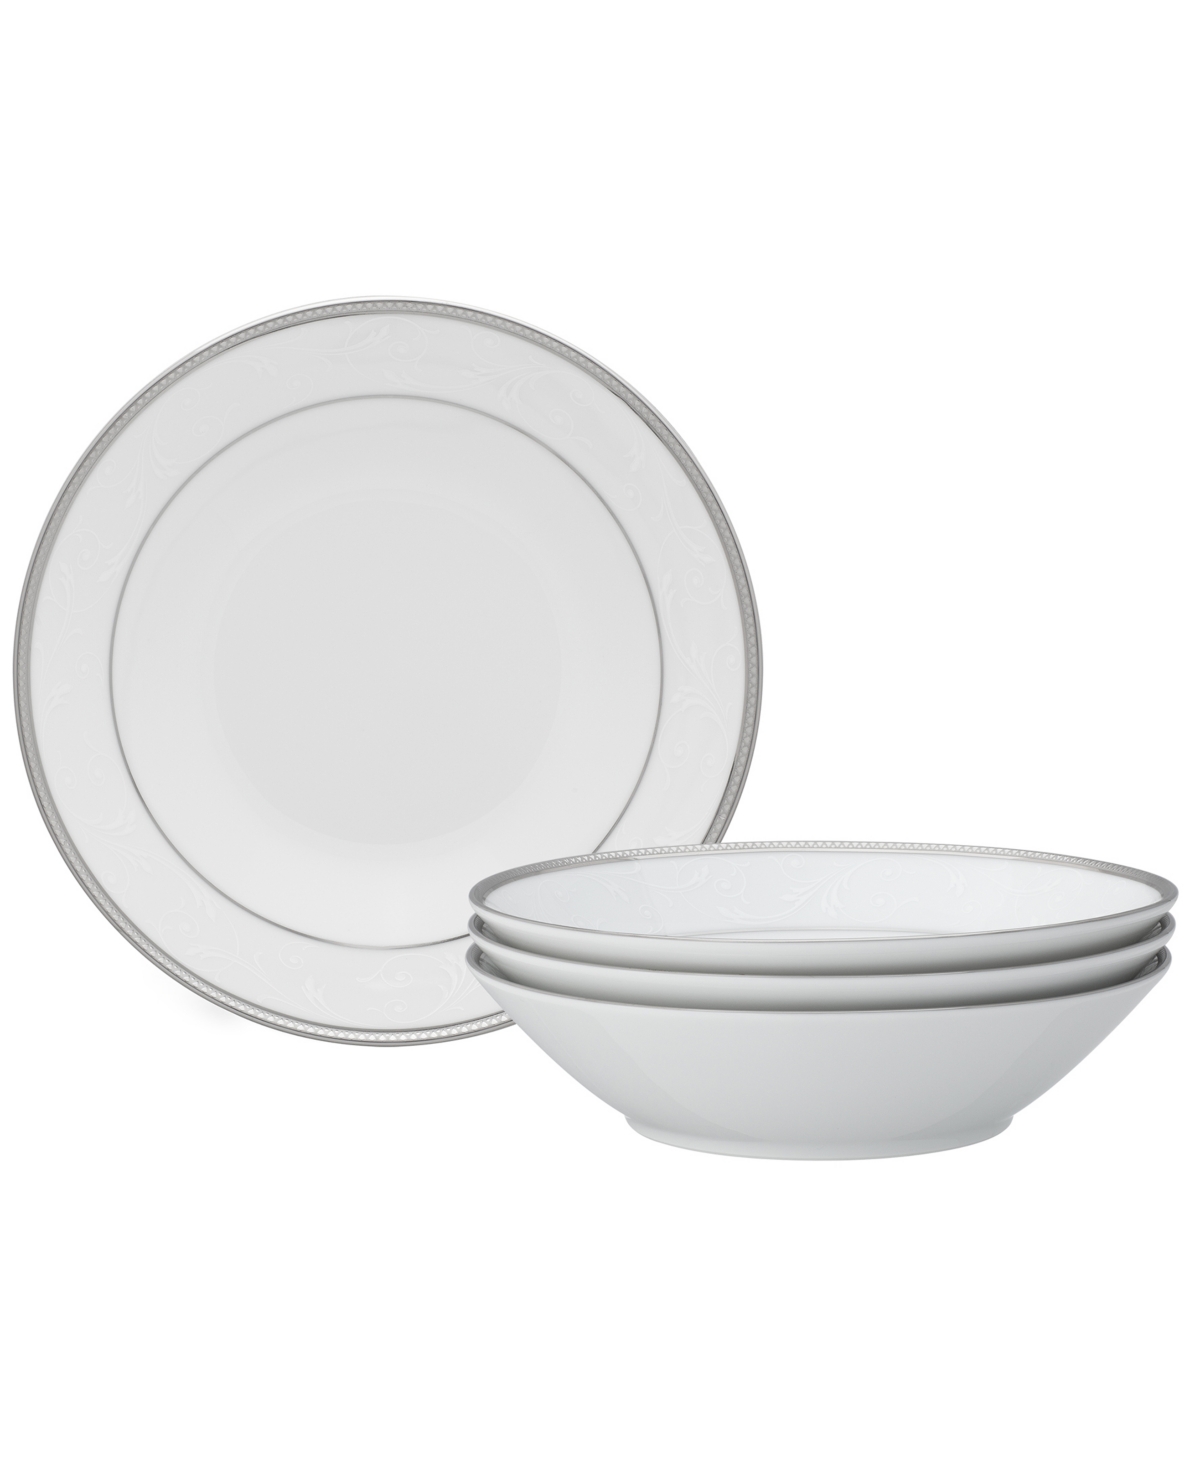 Noritake Regina Platinum Set Of 4 Soup Bowls, Service For 4 In White